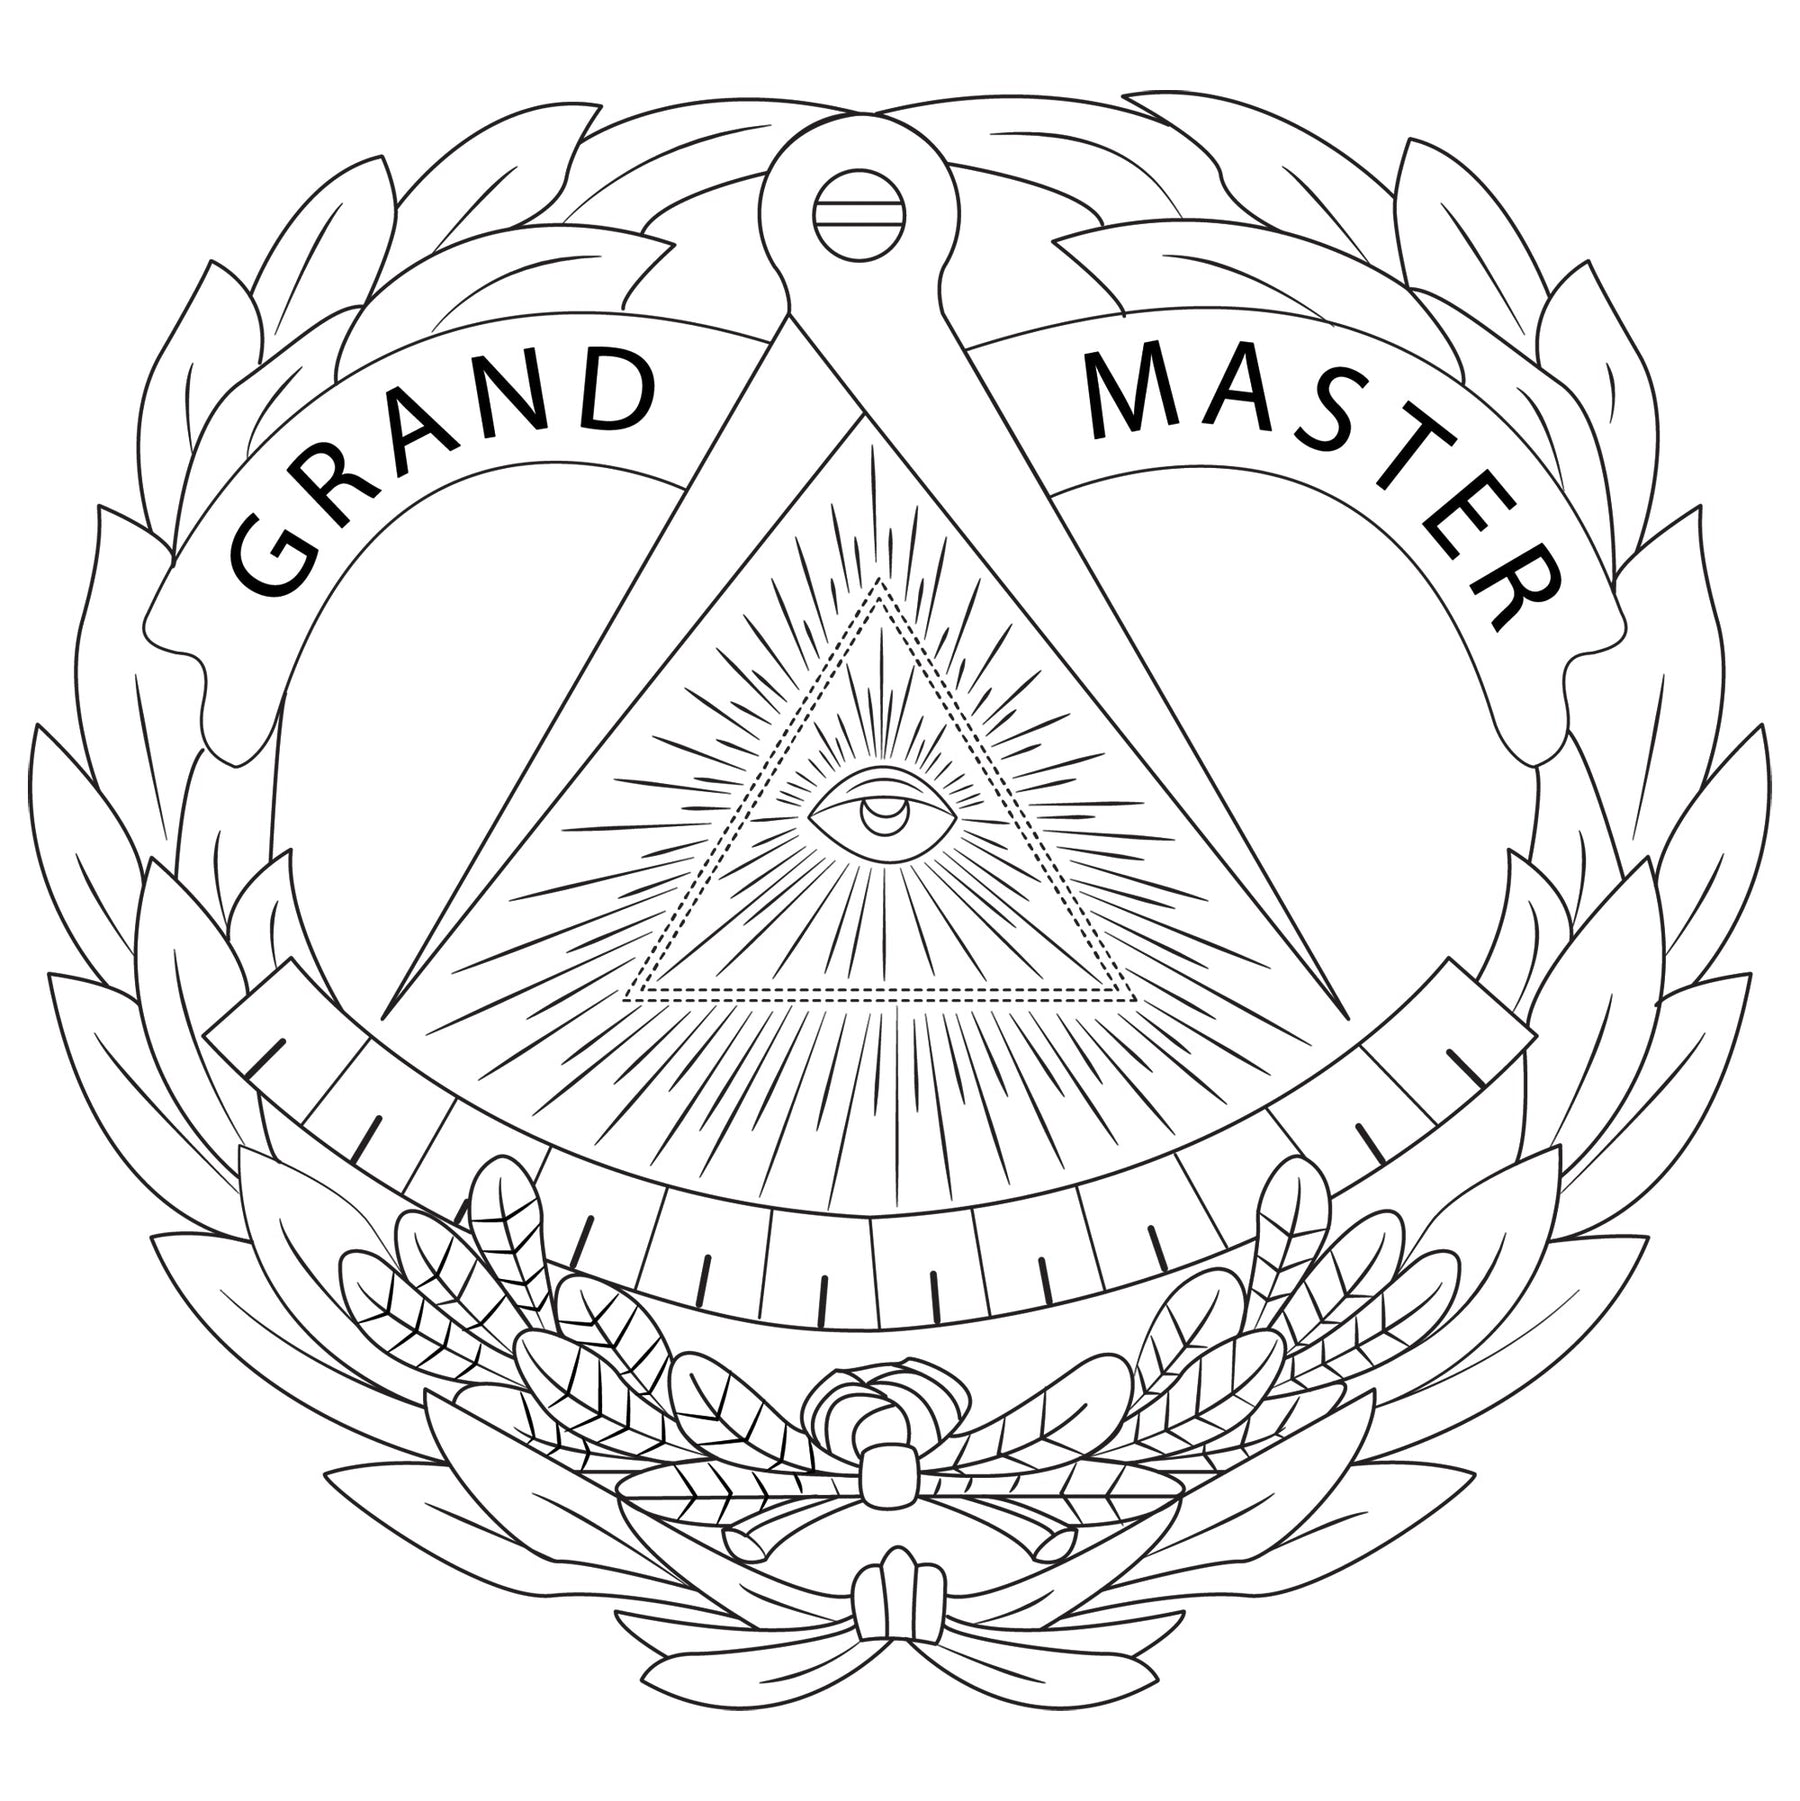 Grand Master Blue Lodge Decanter - 2 Whiskey Tumbler Glasses Set - Bricks Masons